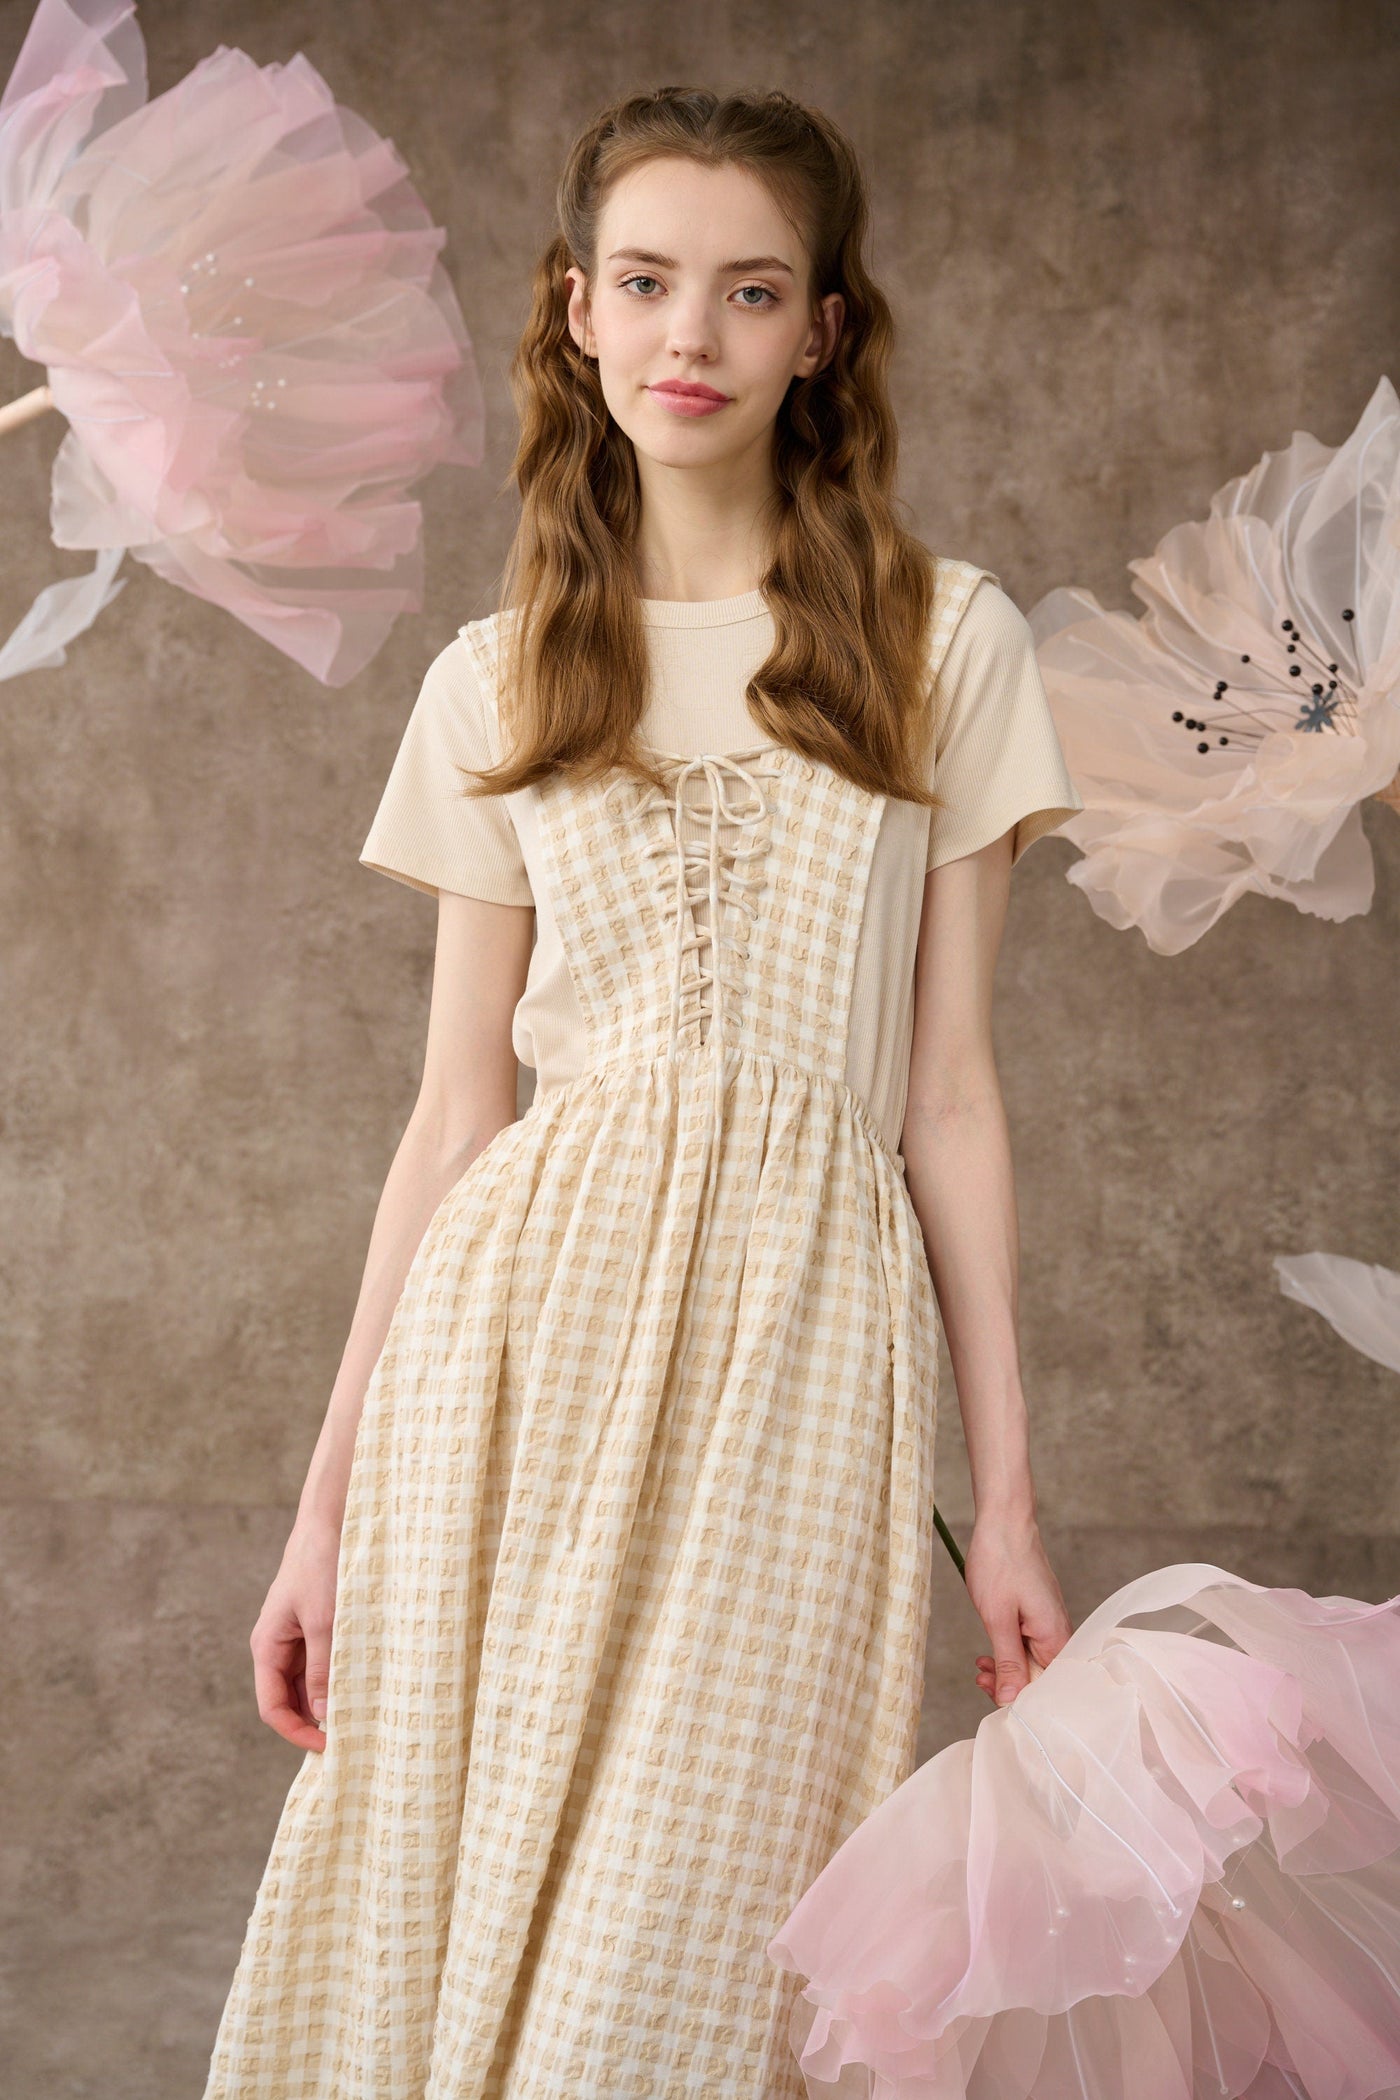 Poet's jasmine 31| lace-up pinafore linen dress in cream